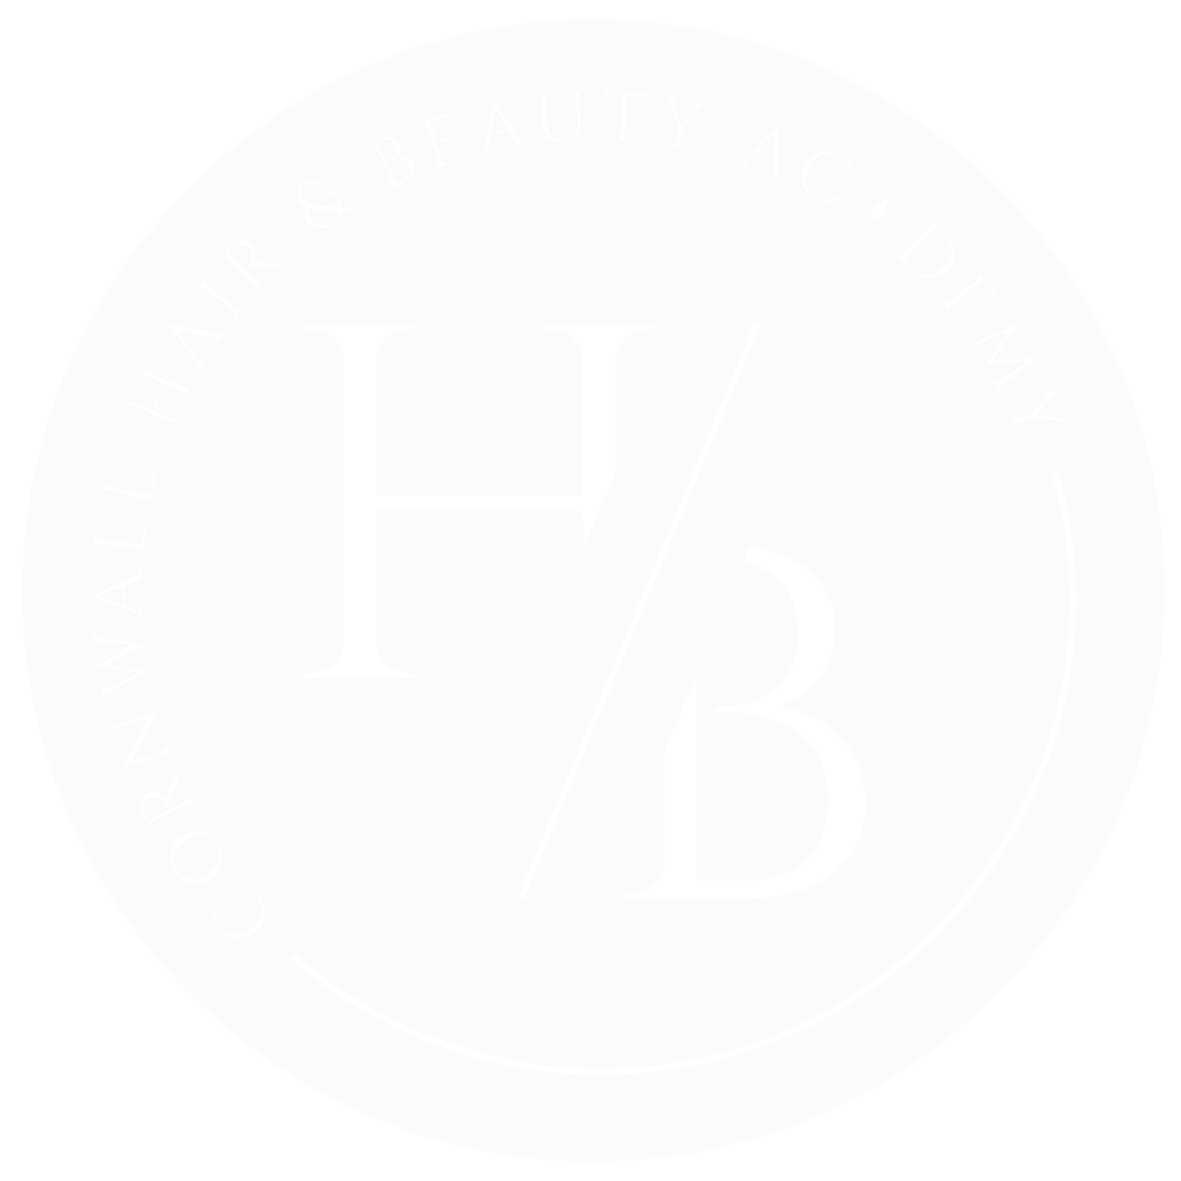 Cornwall Hair and Beauty Academy Logo